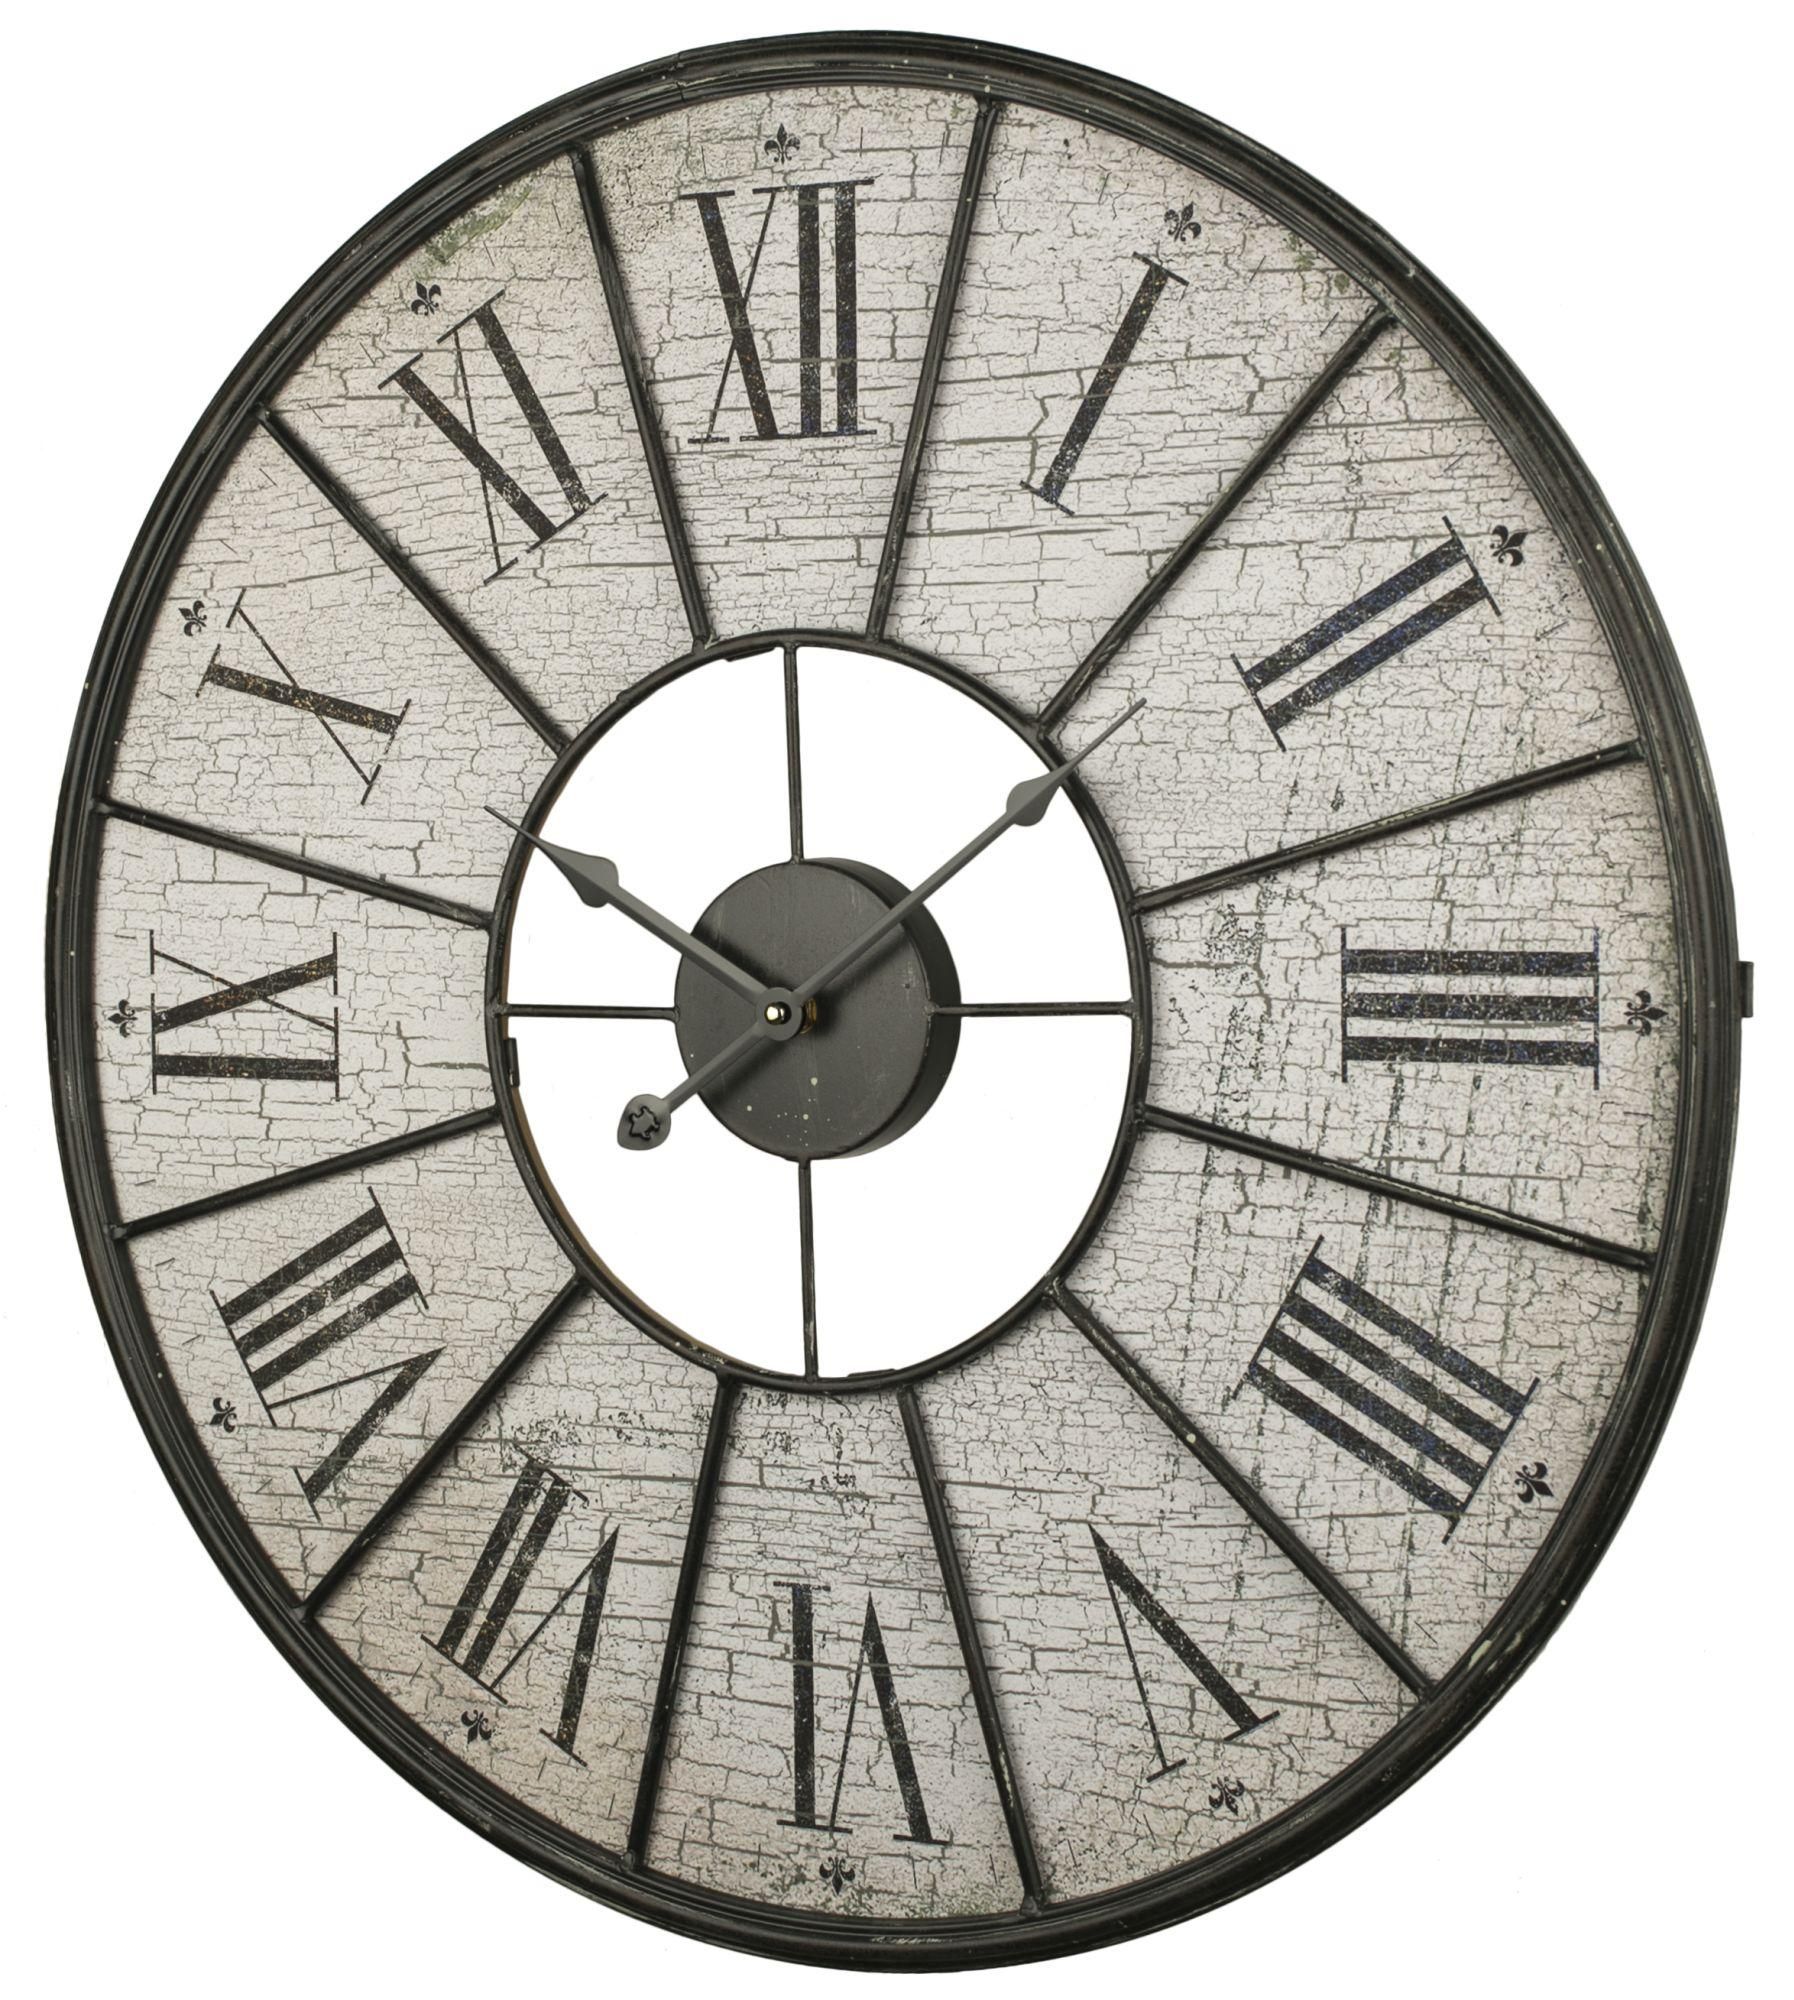 Металлический циферблат. Aviere настенные часы. Часы настенные диаметр 70 см. Настенные часы Aviere 25505. Часы семидесятых настенные.